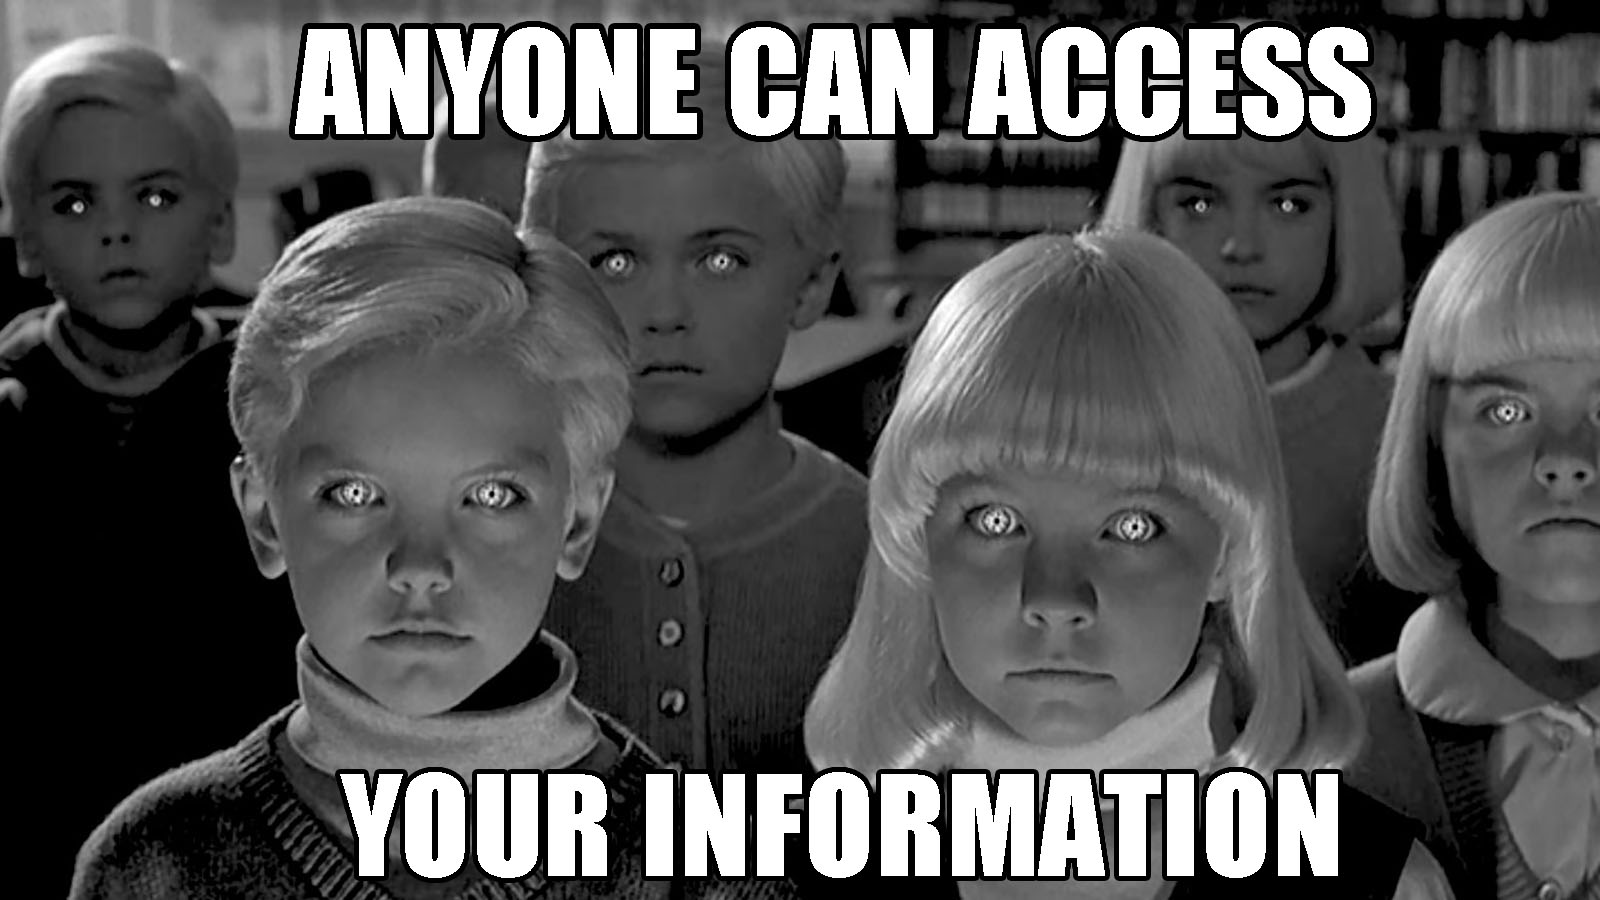 scary kids information